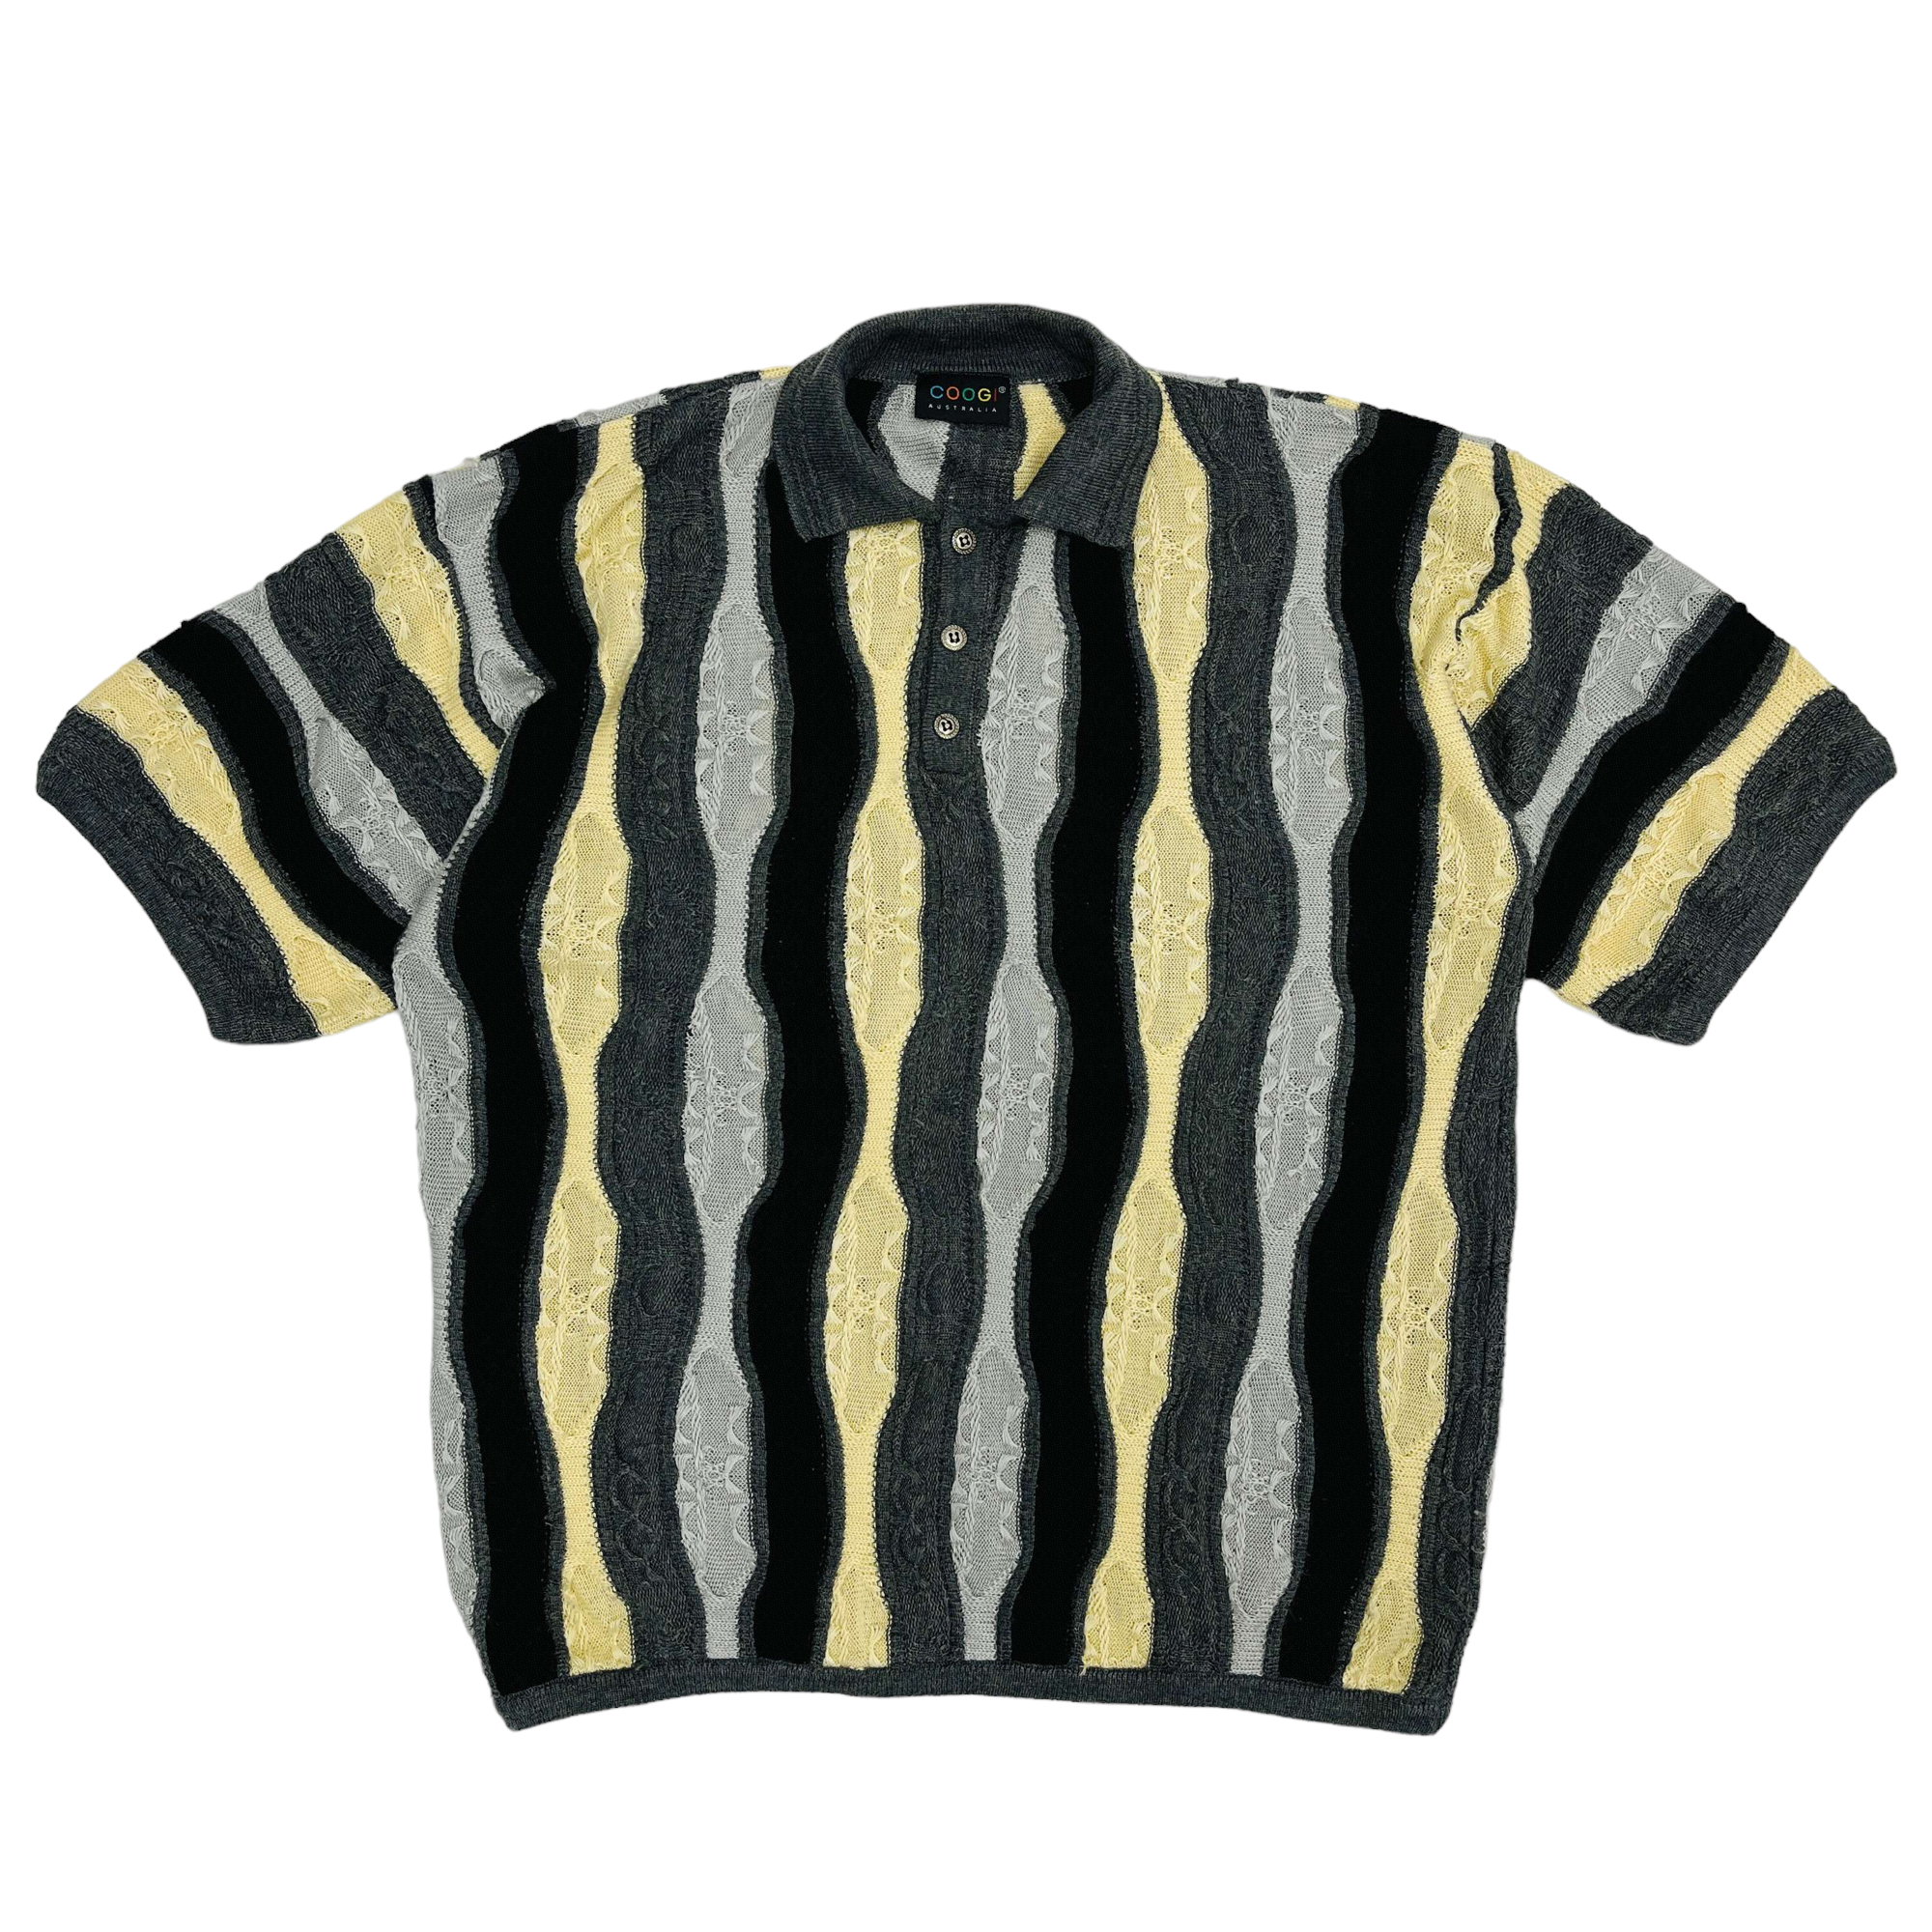 Coogi Knit Shirt - 2XL